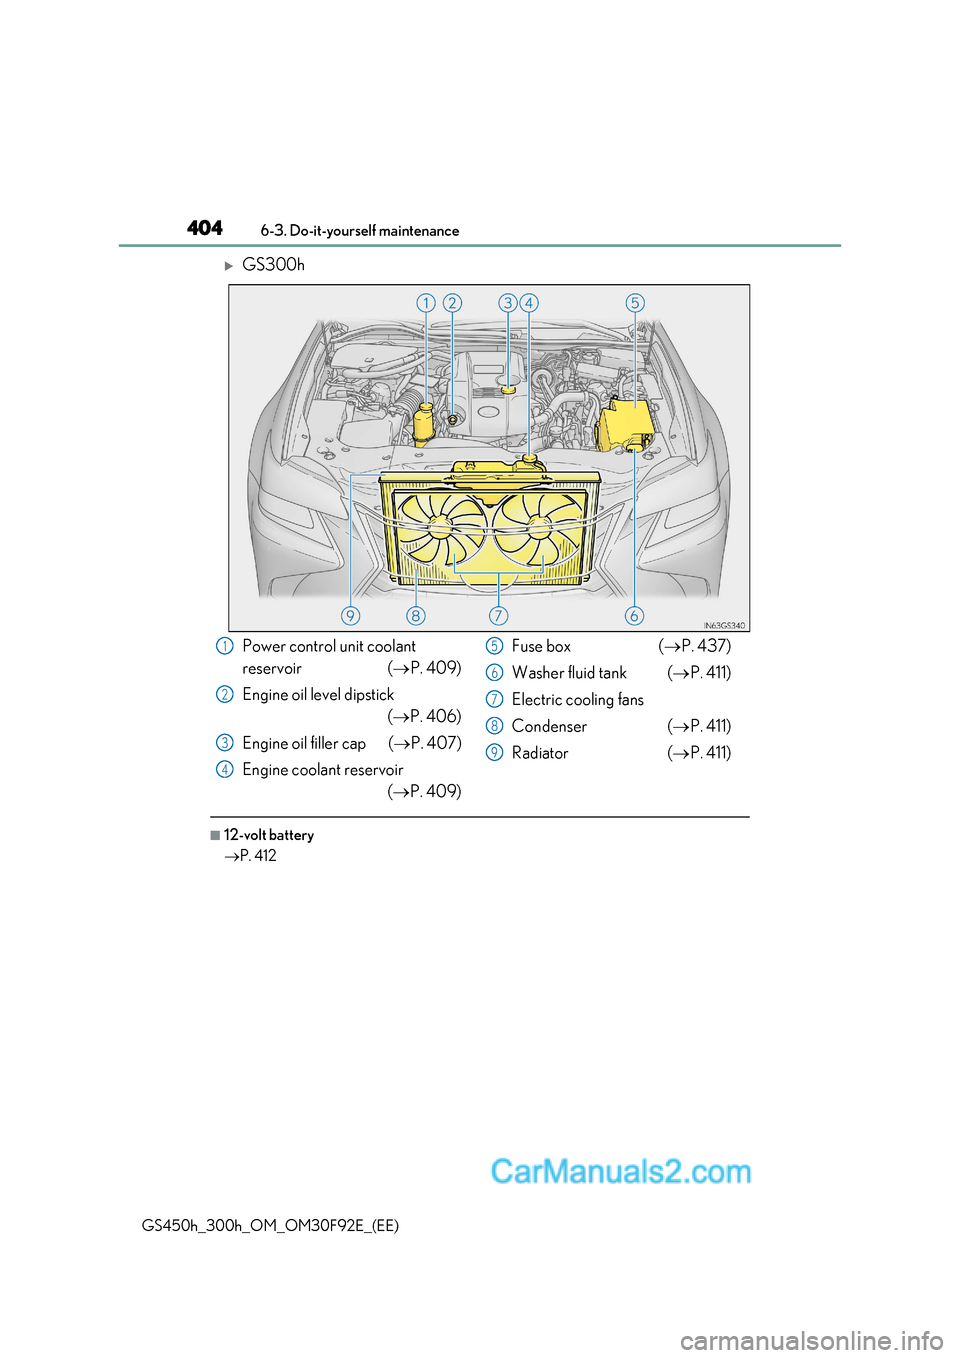 Lexus GS300h 2017  Owners Manual 4046-3. Do-it-yourself maintenance
GS450h_300h_OM_OM30F92E_(EE)
GS300h
■12-volt battery P. 412
Power control unit coolant  
reservoir ( P. 409)
Engine oil level dipstick ( P. 406)
Engine